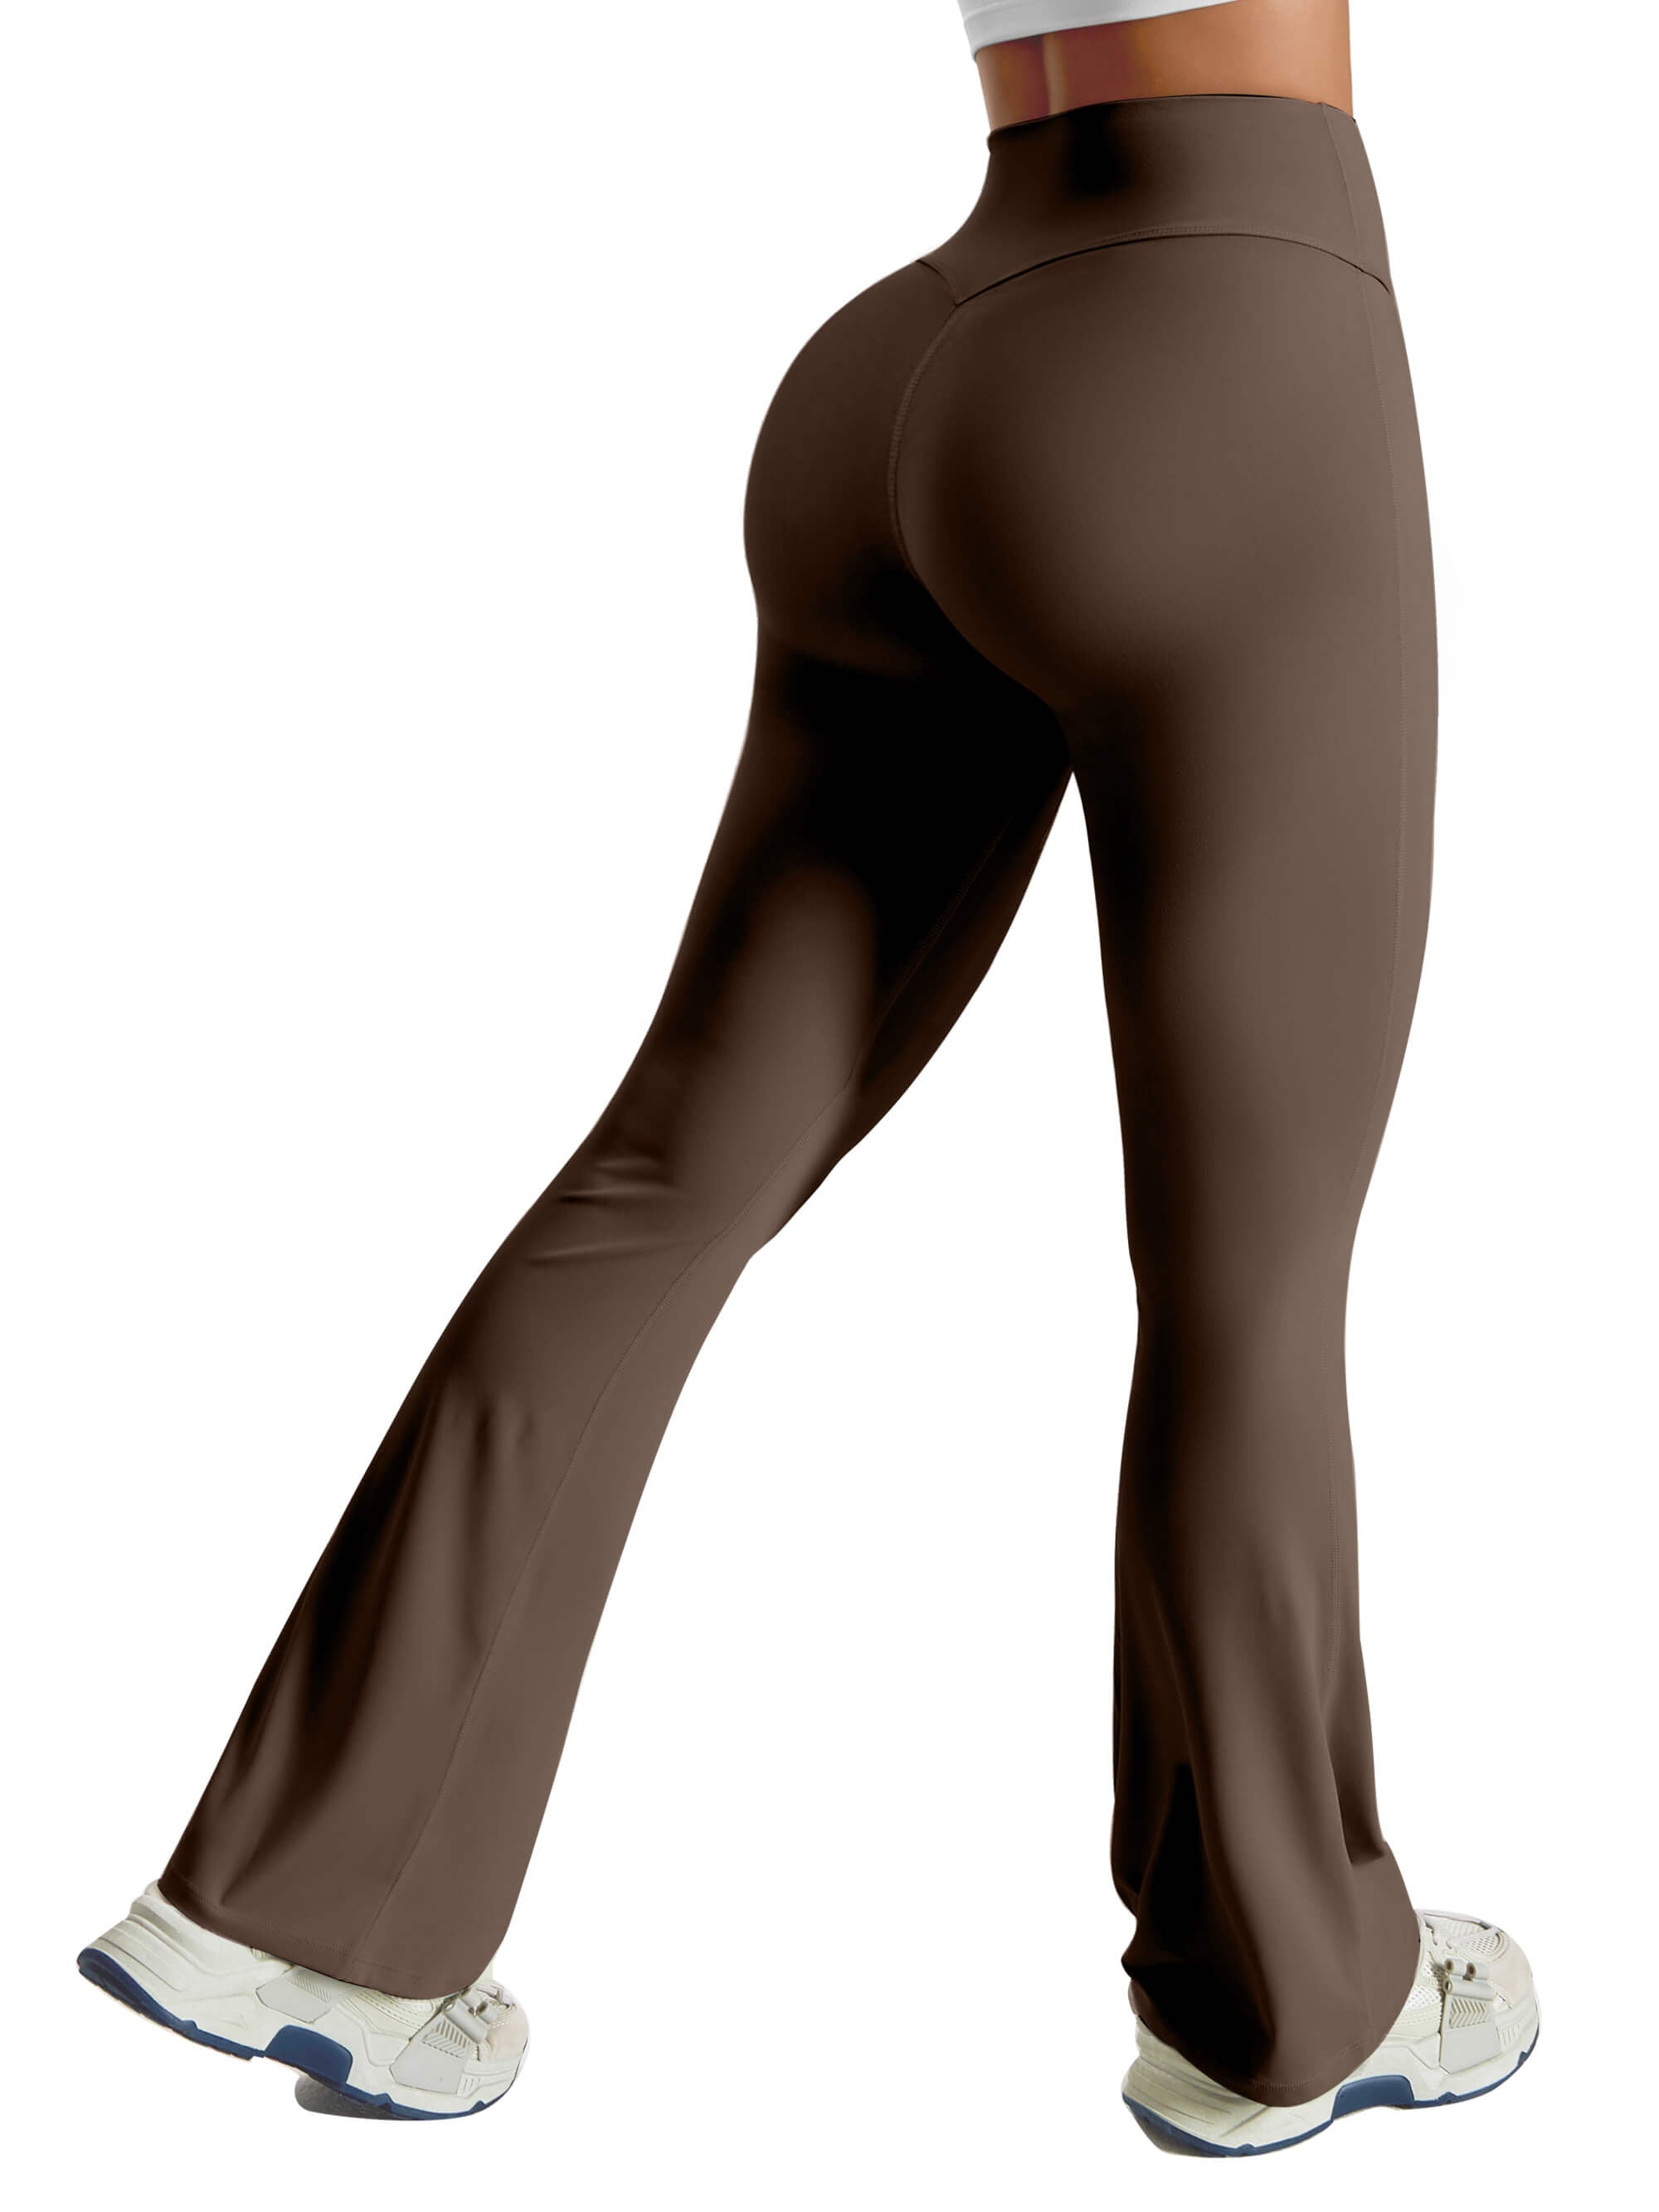 Women's Yoga Flare pants High waist buttock lifting wide leg pants